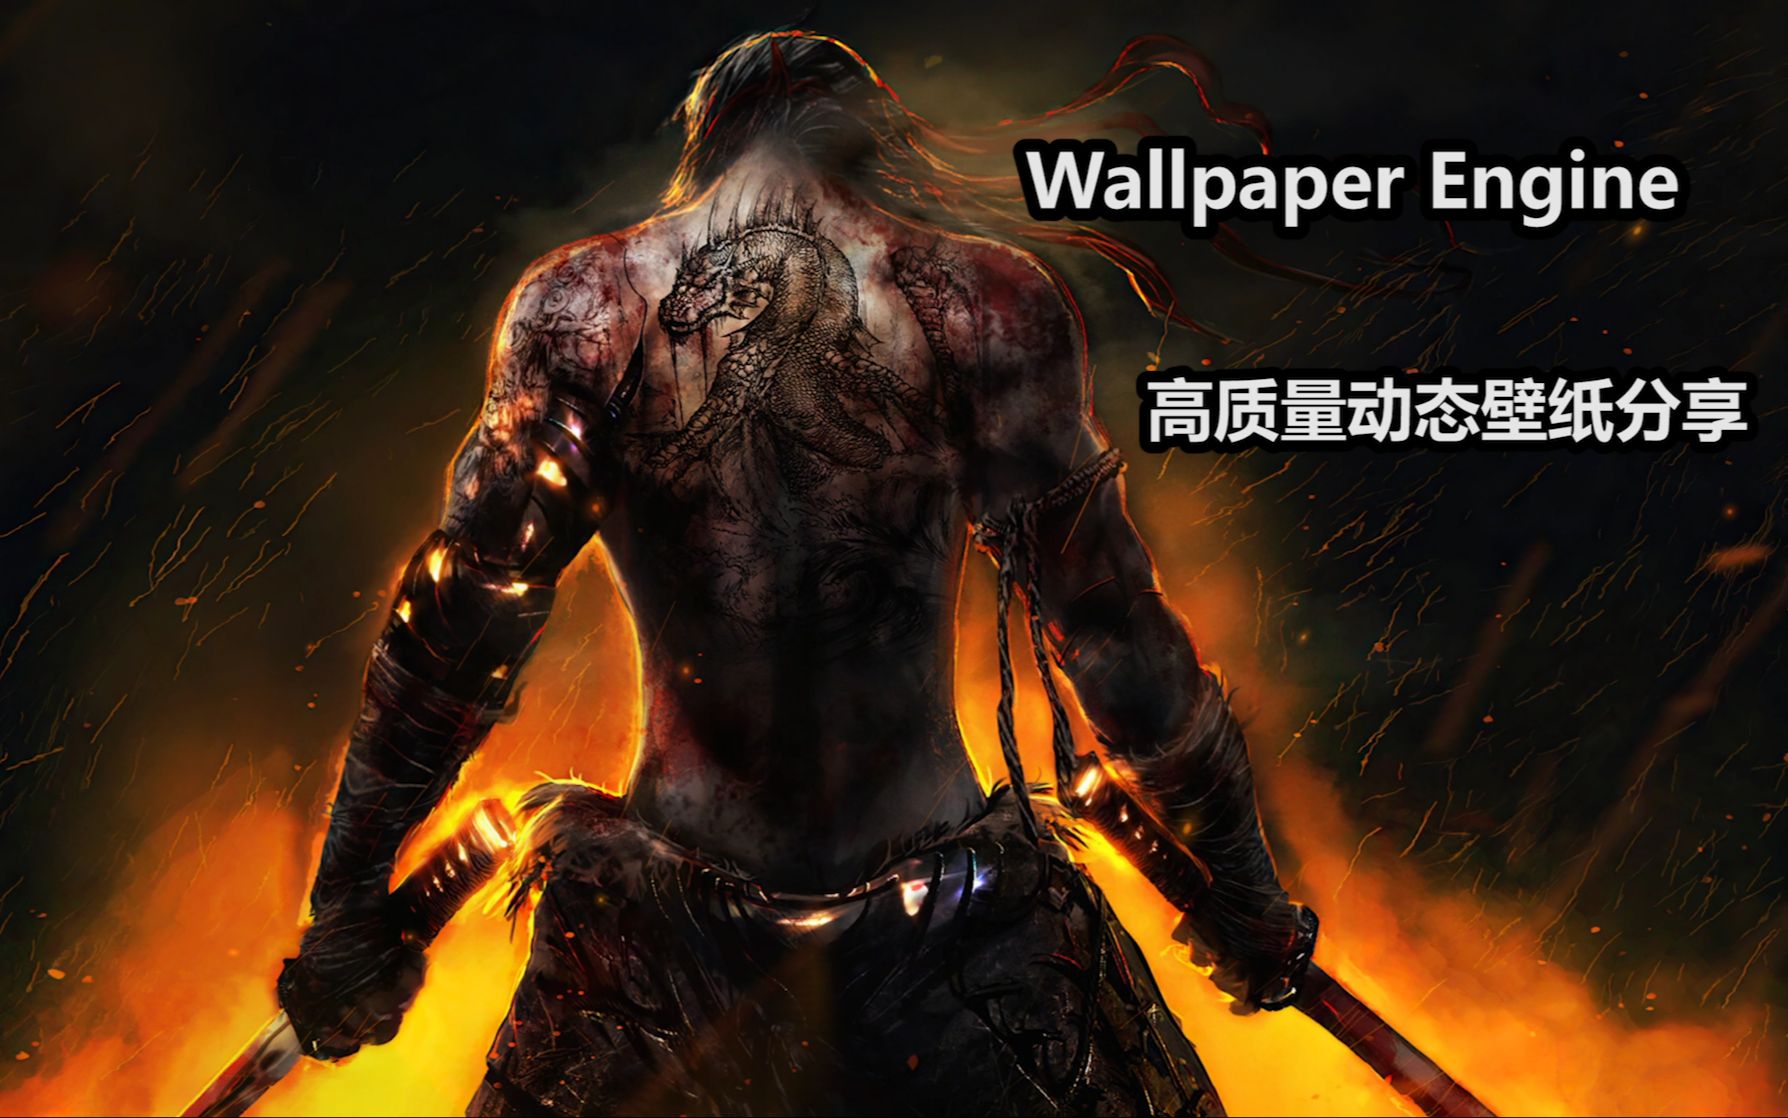 【wallpaper engine】这才是猛男该用的壁纸 高质量动态壁纸分享第二